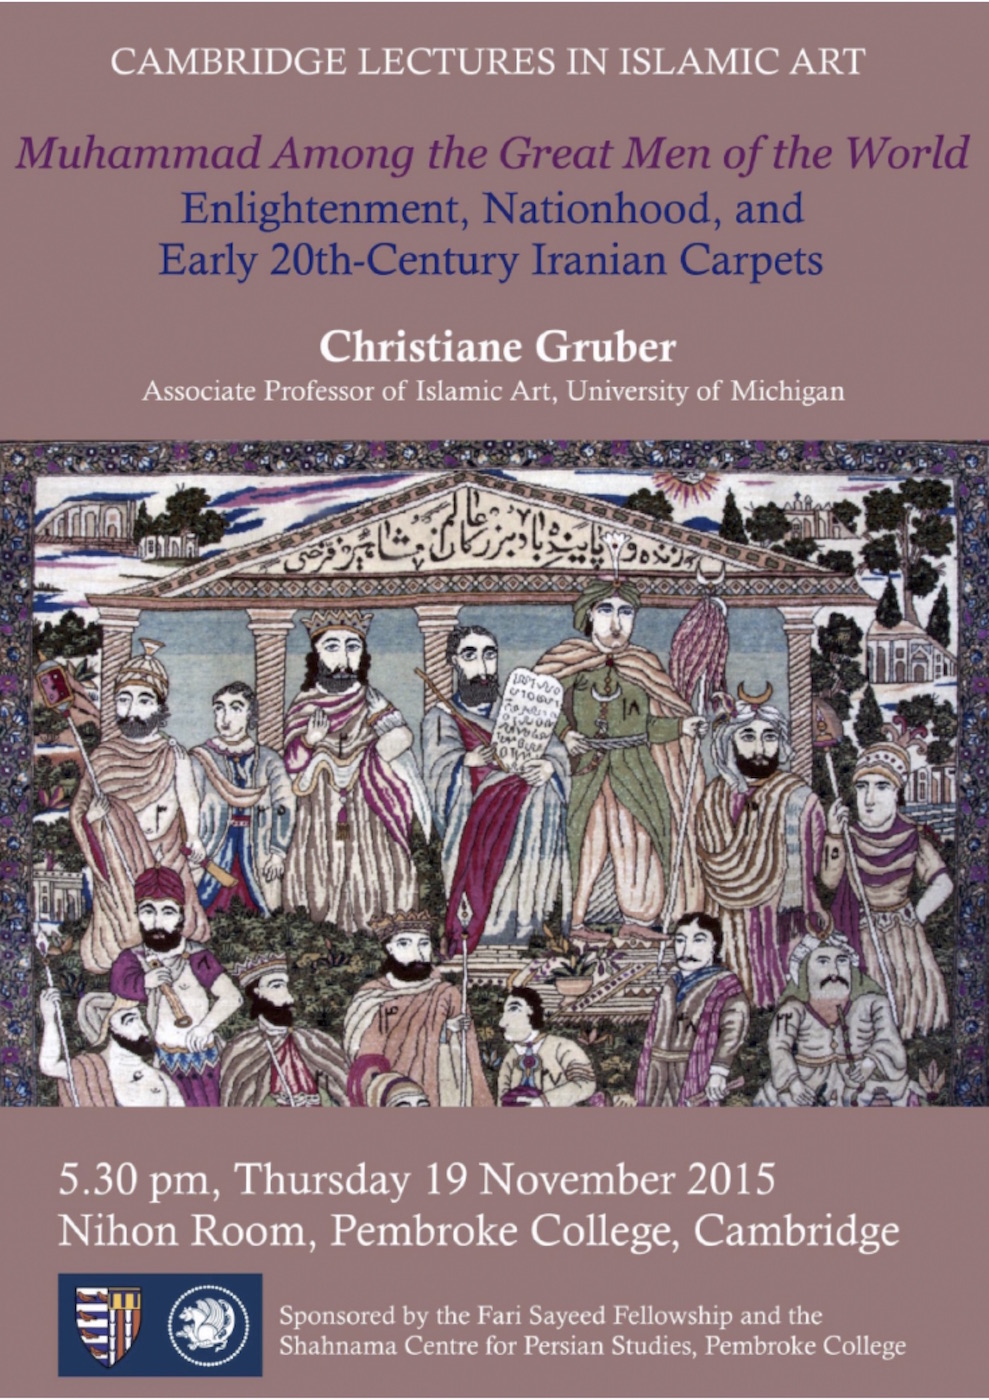 Cambridge Lectures in Islamic Art's image